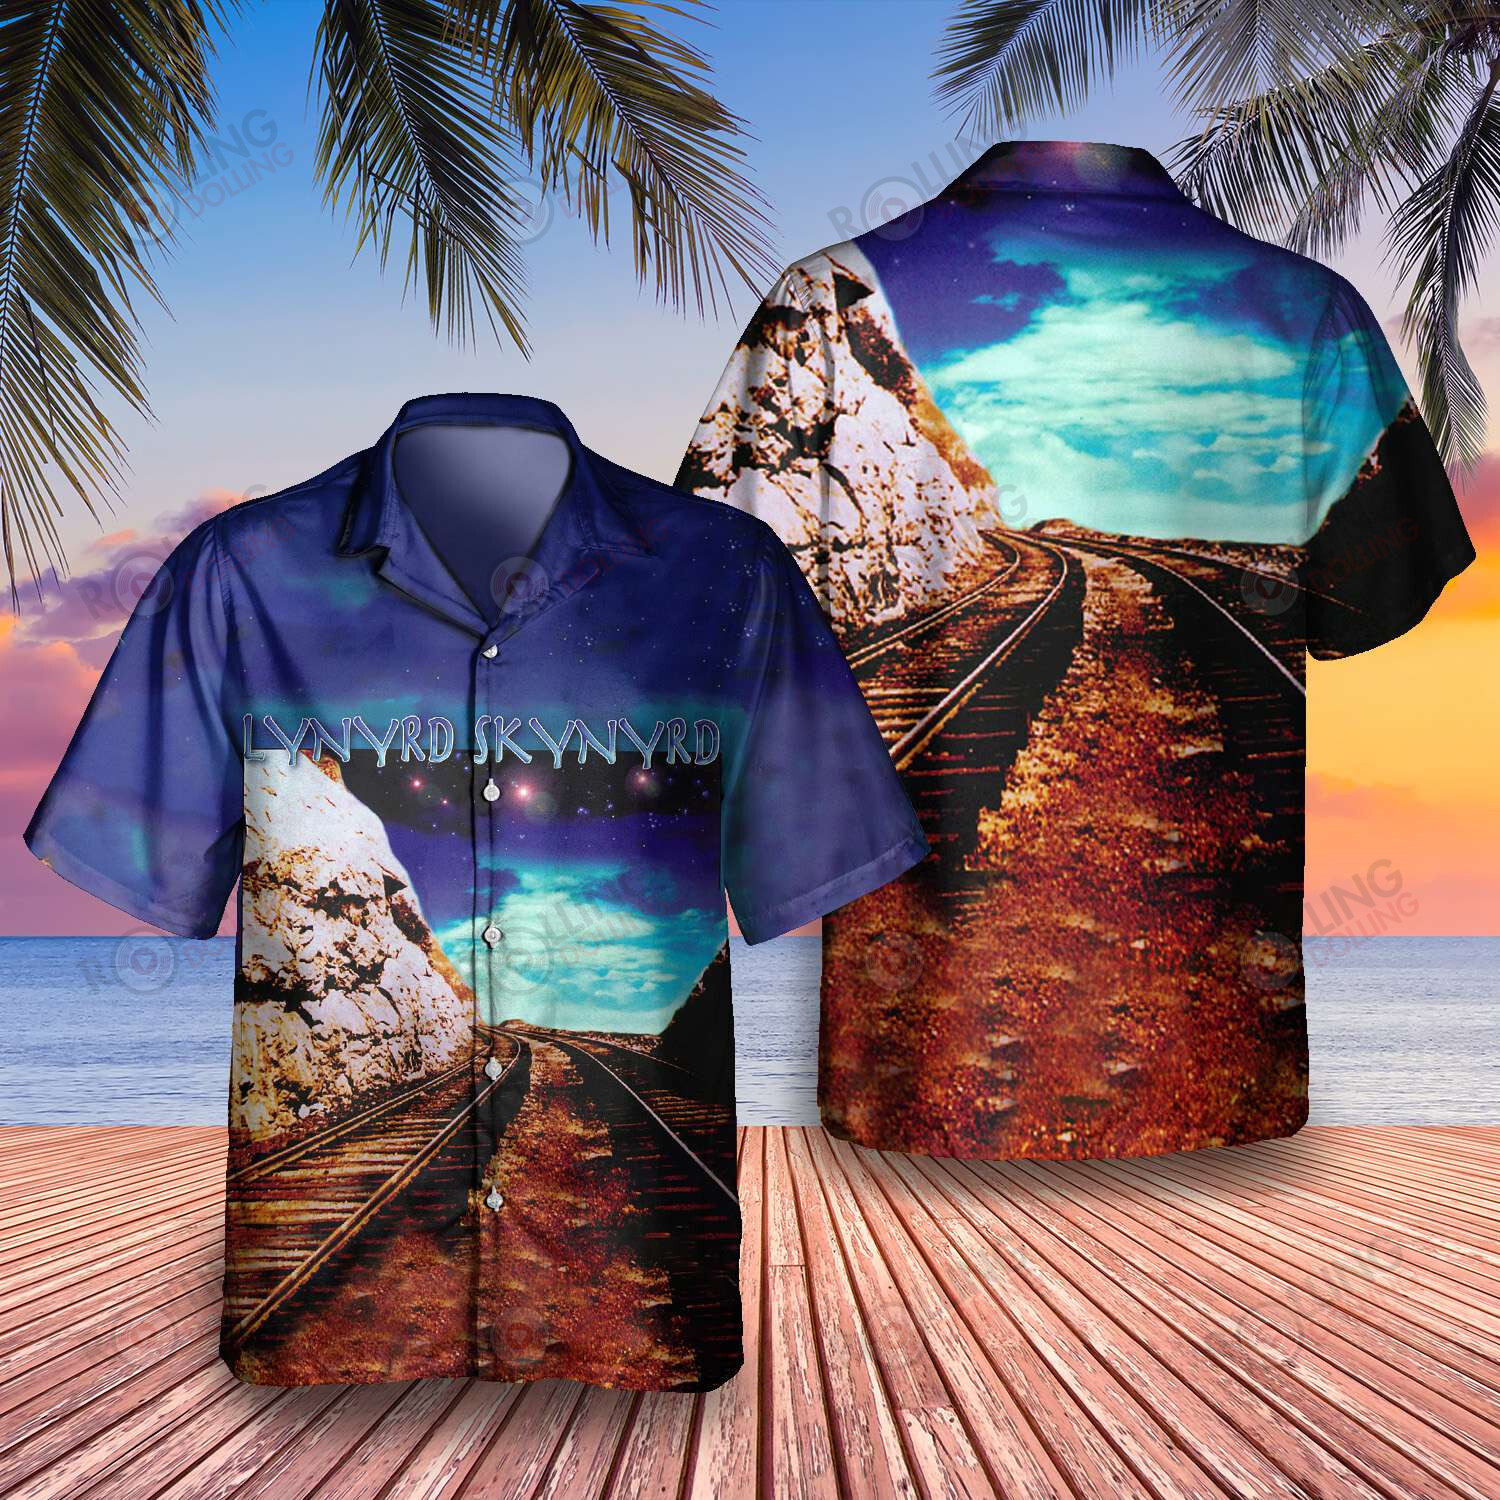 Regardless of their style, you will feel comfortable wearing Hawaiian Shirt 97